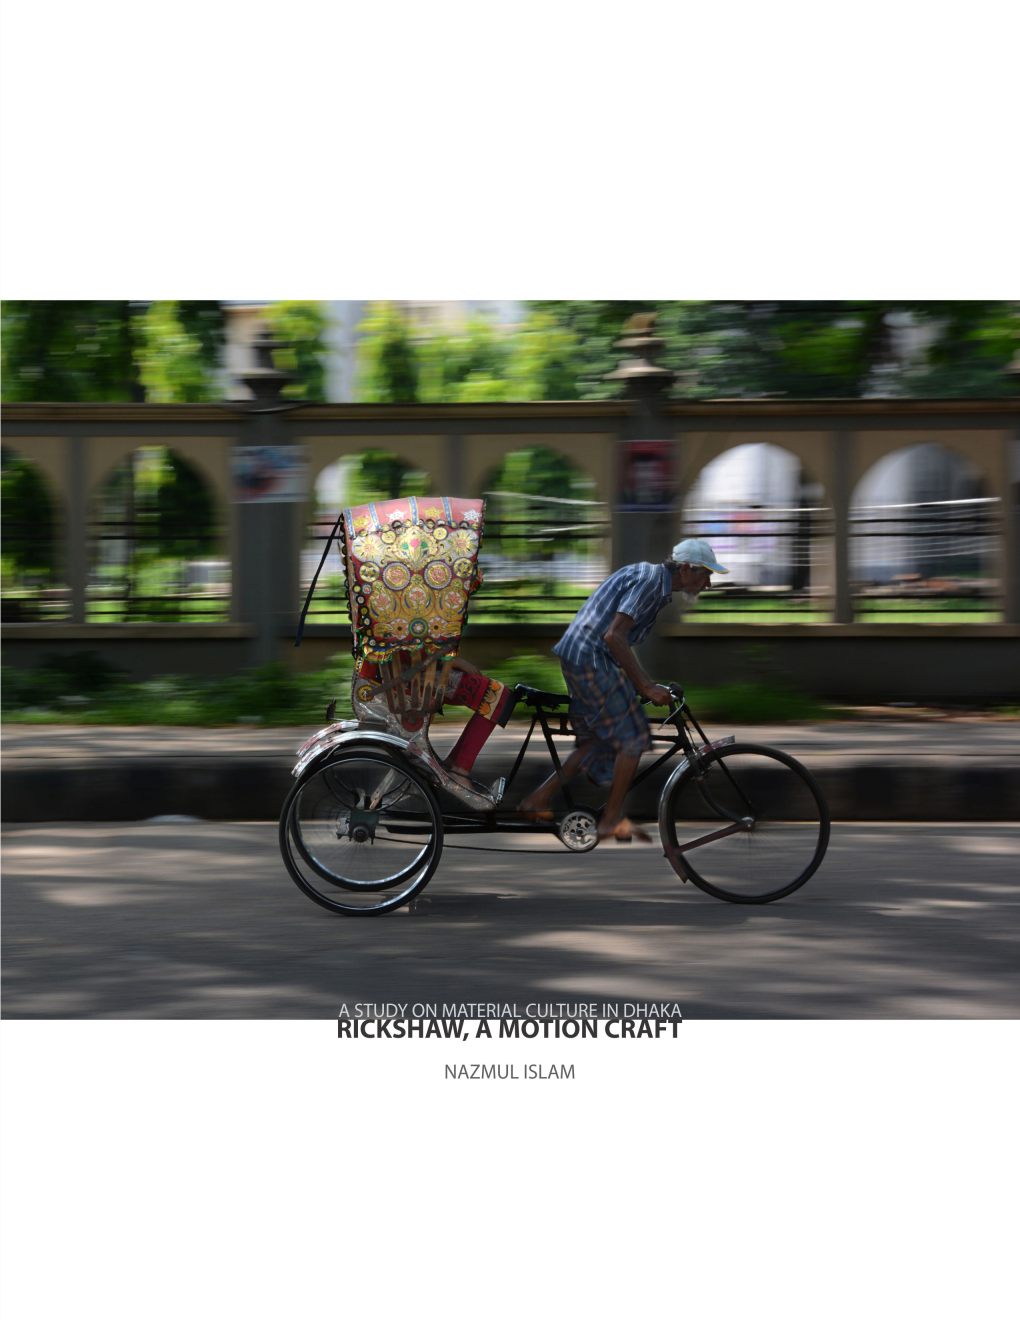 Rickshaw, a Motion Craft